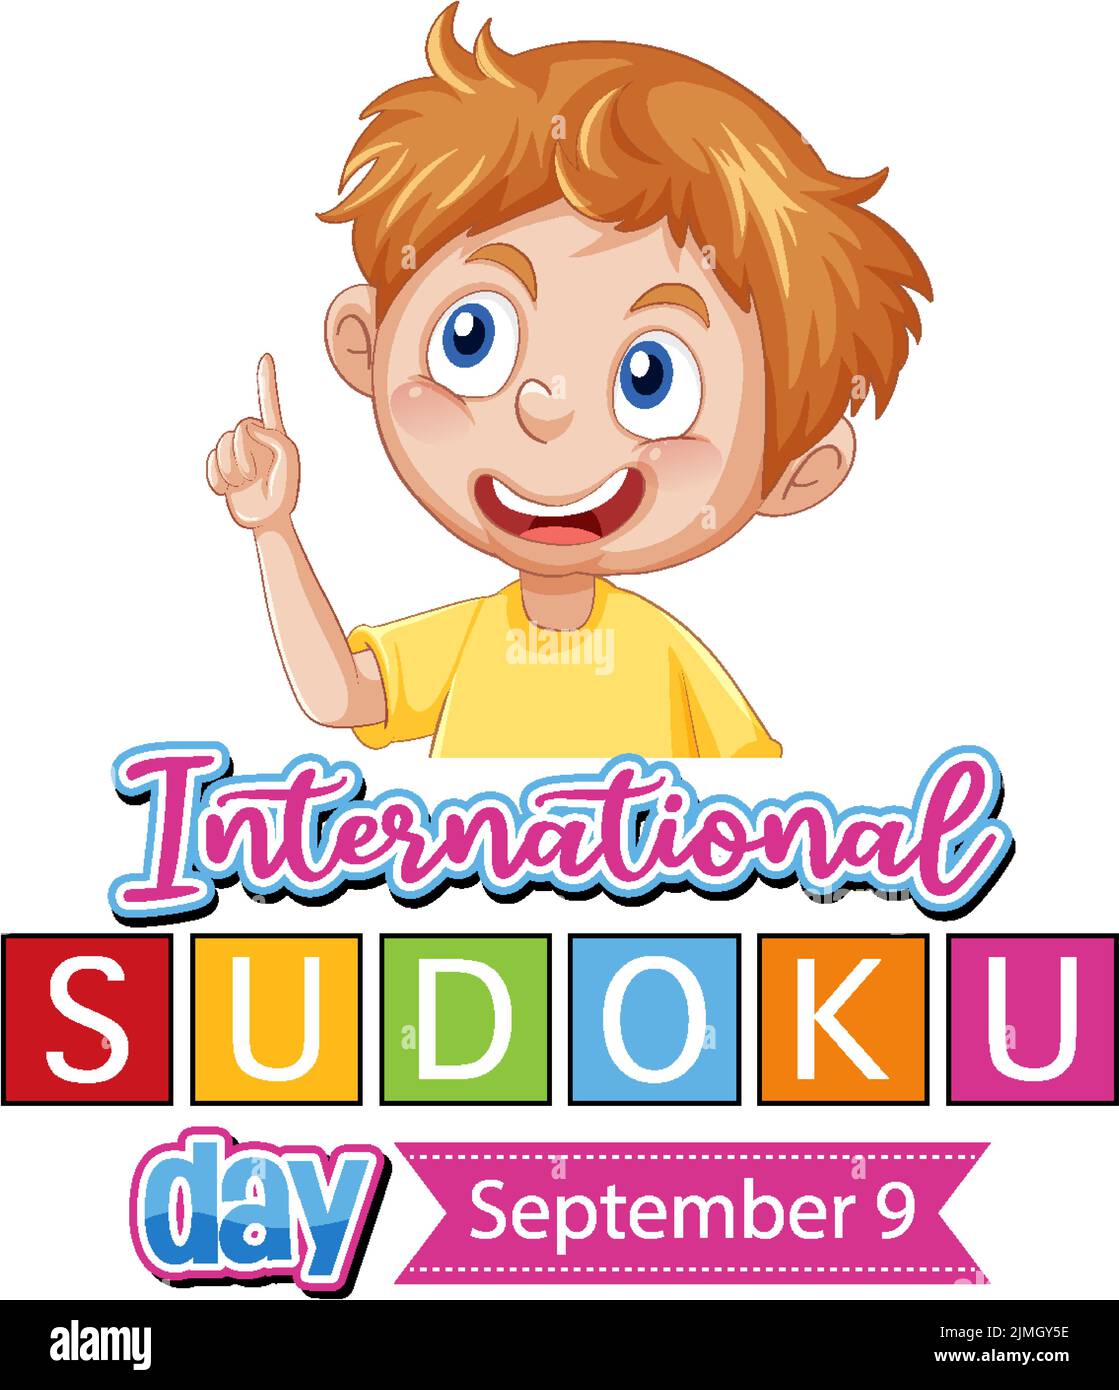 International Sudoku Day September 9 illustration Stock Vector